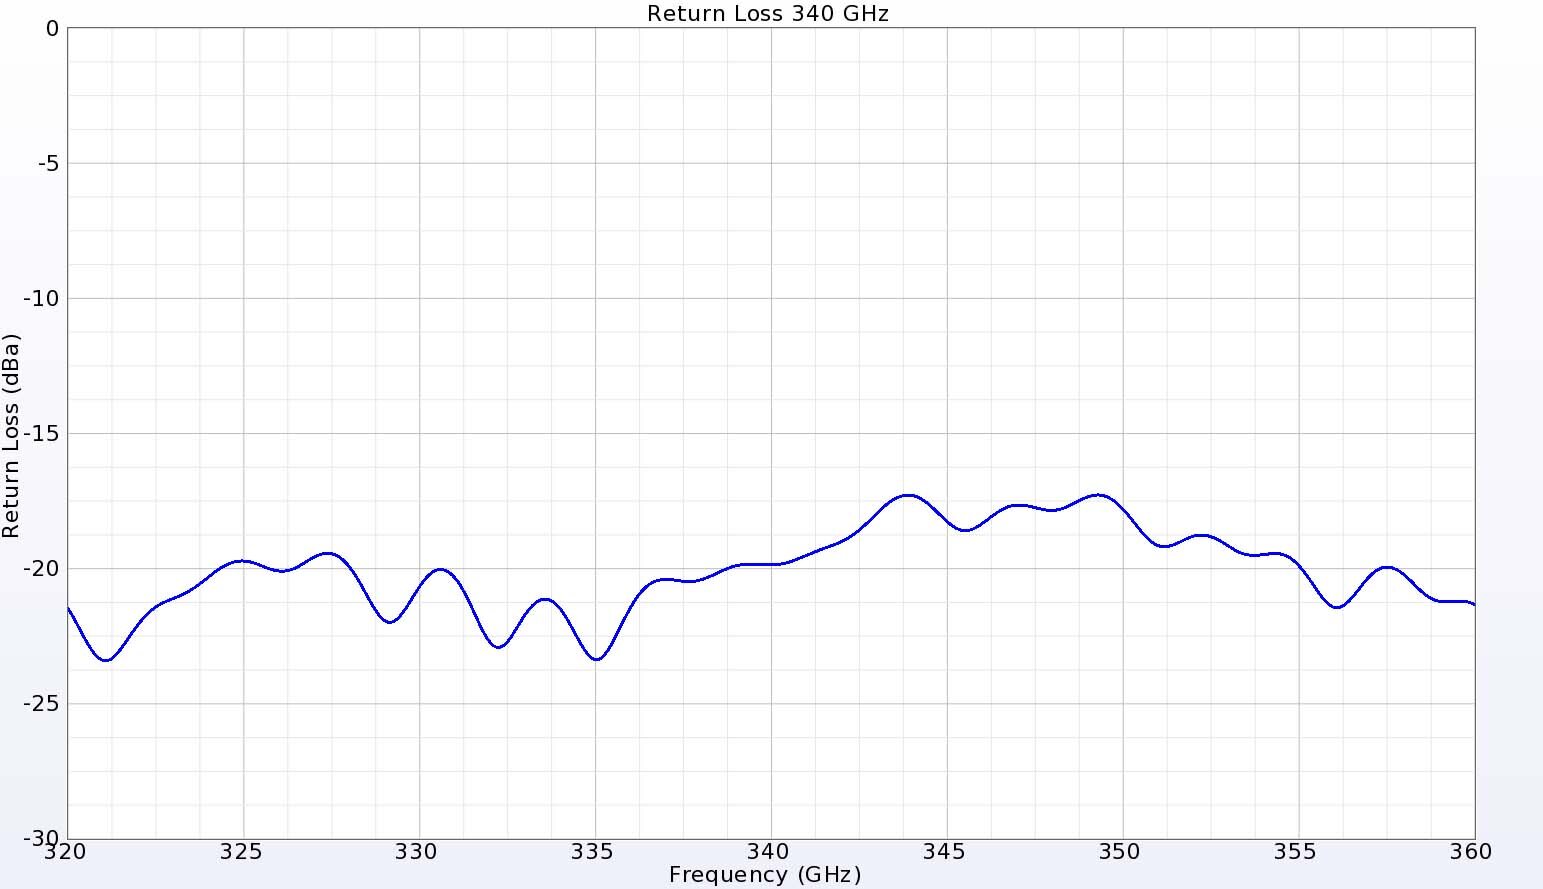 Figura 5: A 340 GHz, la pérdida de retorno es de casi -20 dB para el puerto de banda alta.